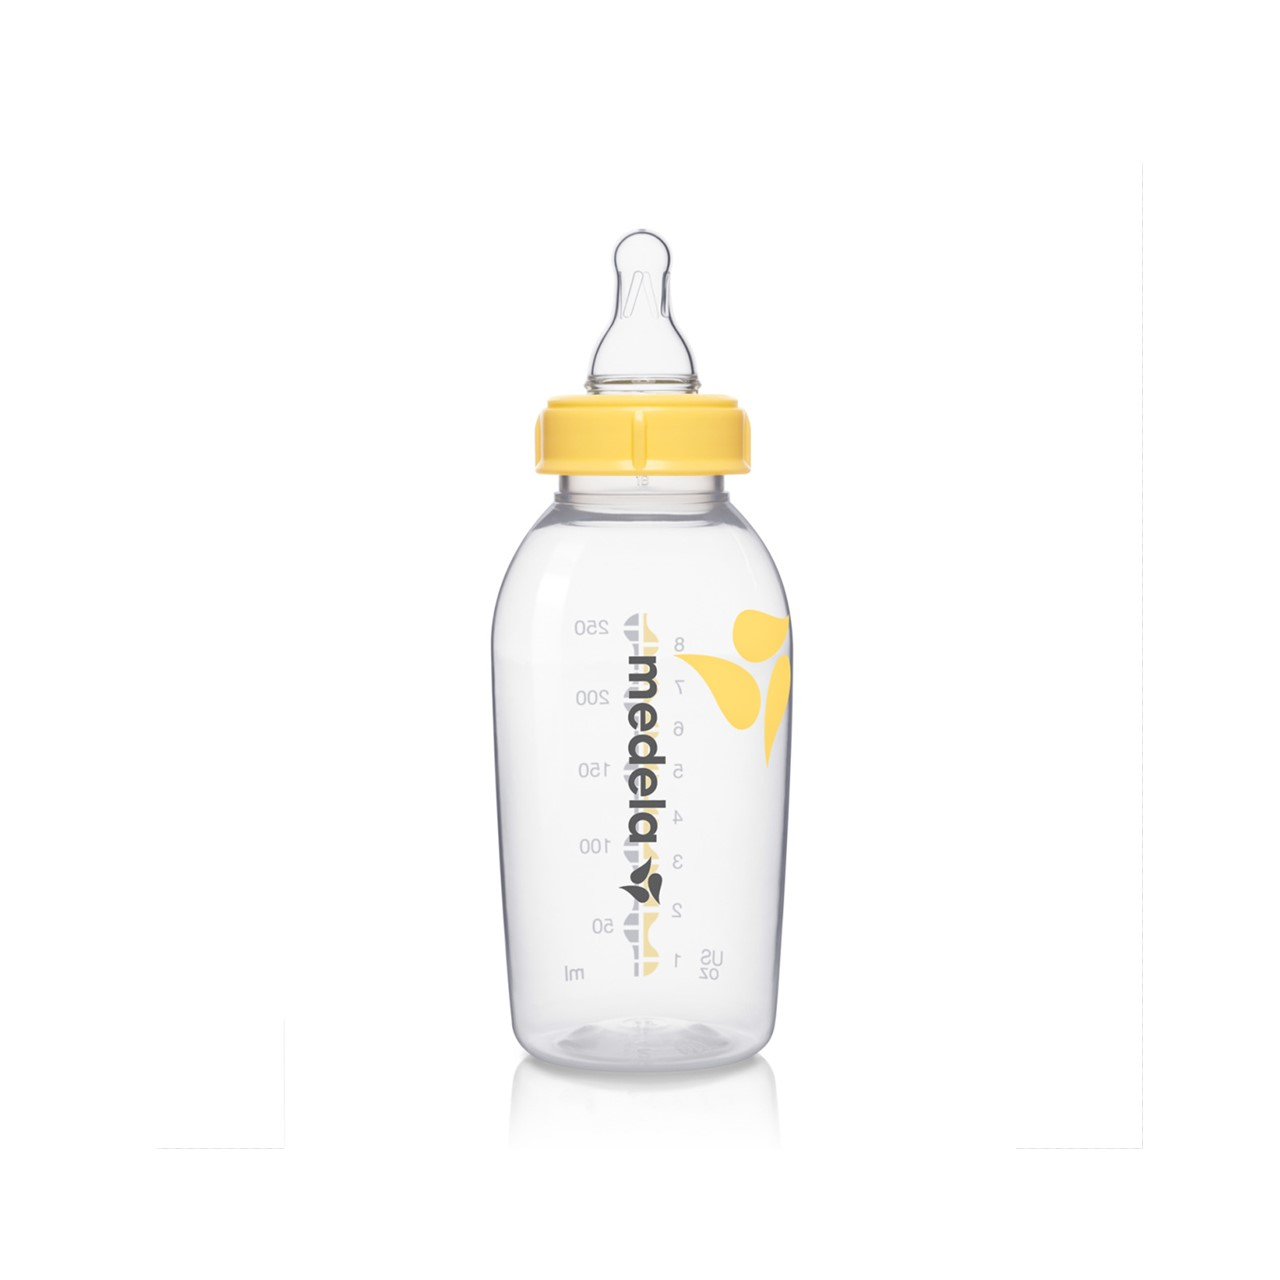 Medela Baby Bottle with Medium Flow Nipple 250ml